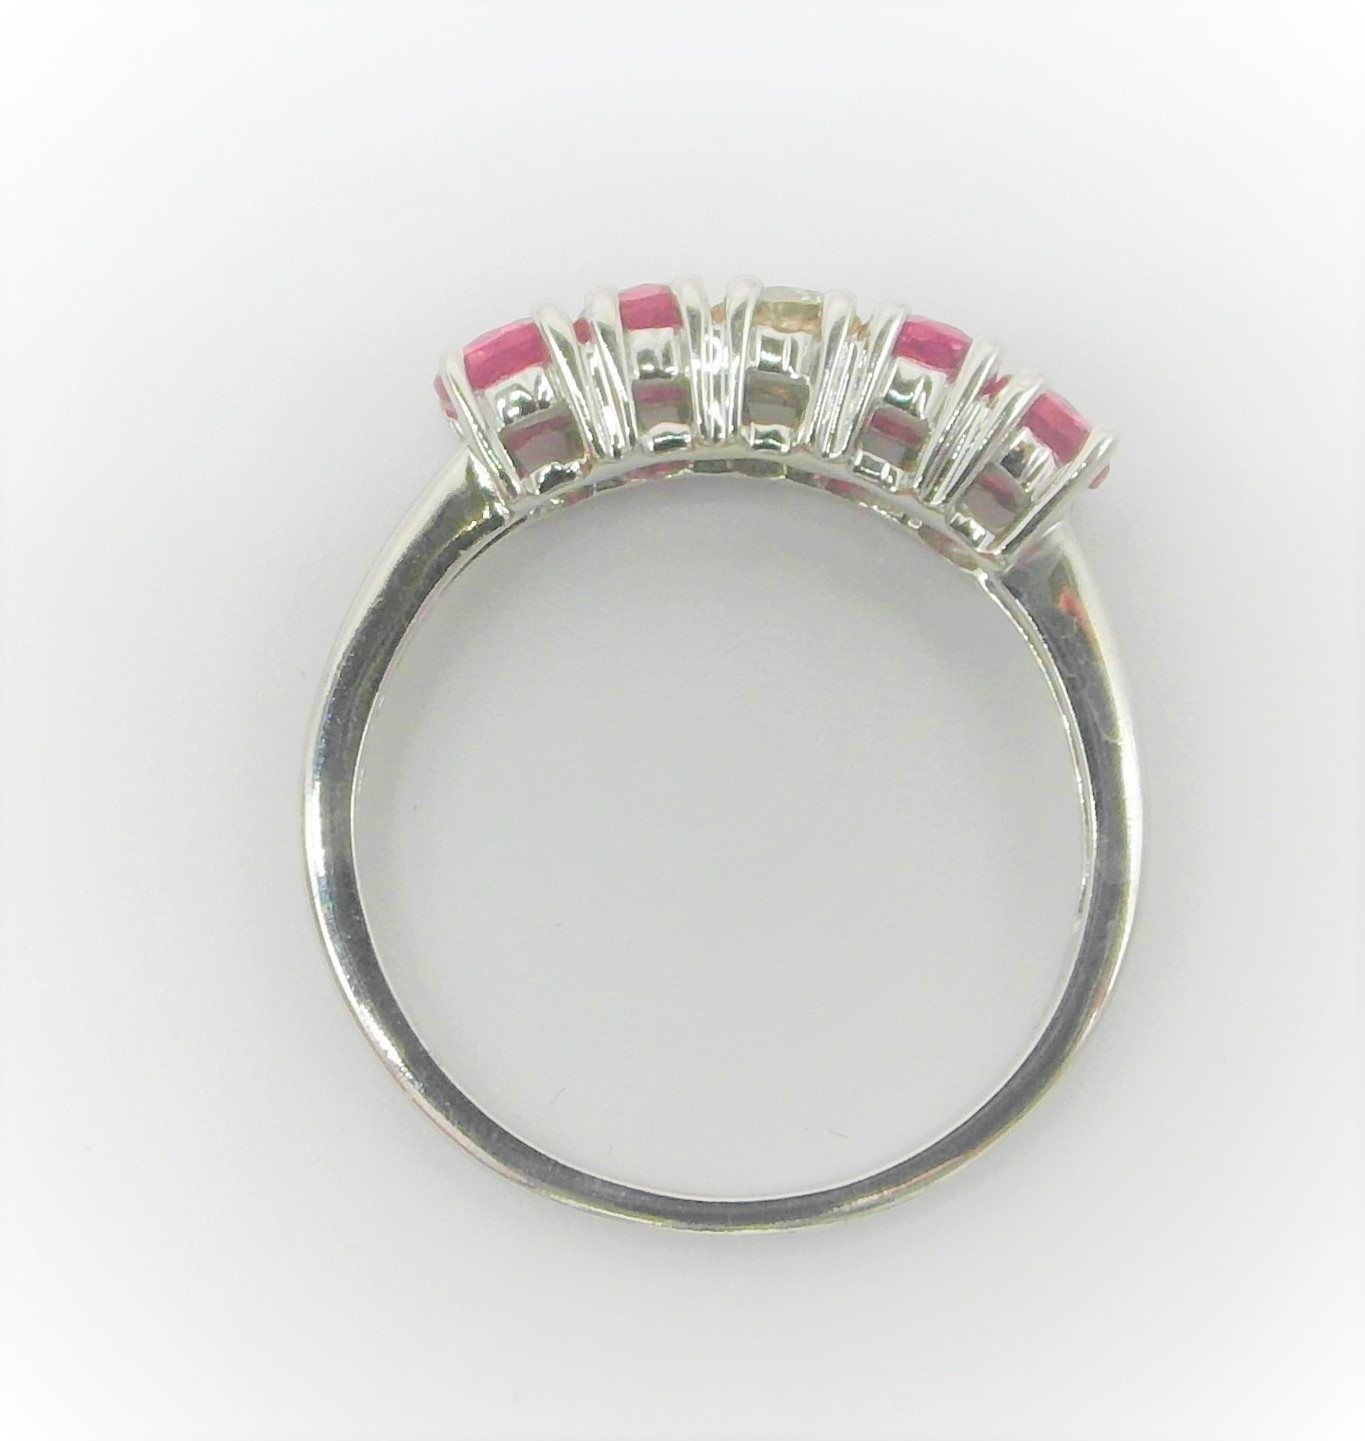 5 Stone Pink Sapphire & Diamond Ring - Image 2 of 5